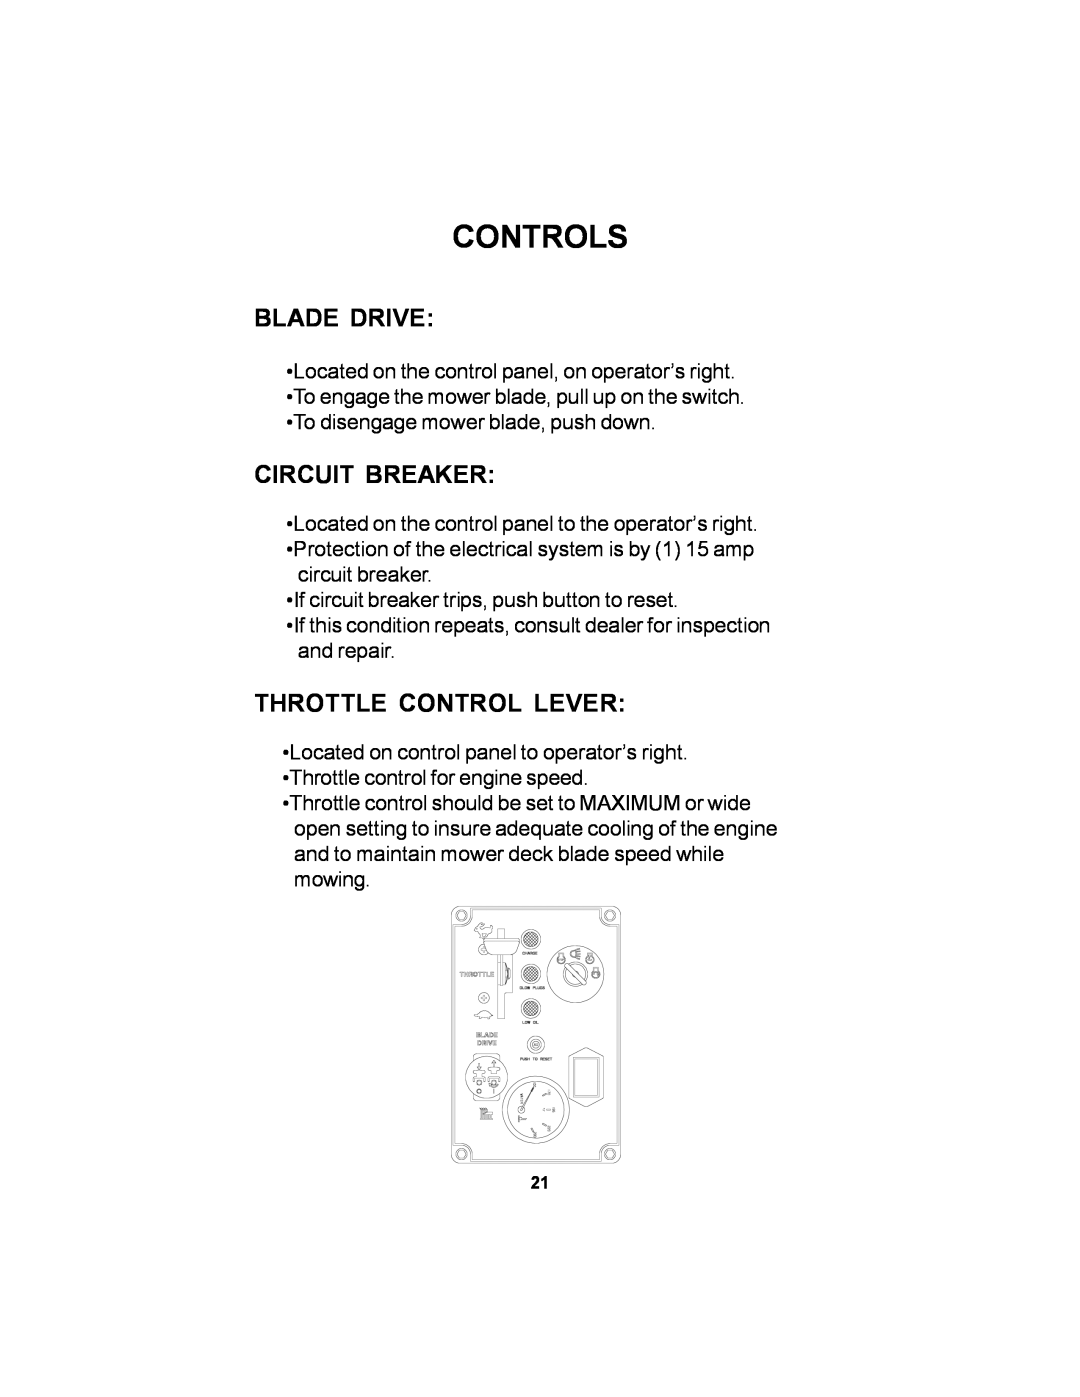 Dixon 18626-106 manual Blade Drive, Circuit Breaker, Throttle Control Lever, Controls 